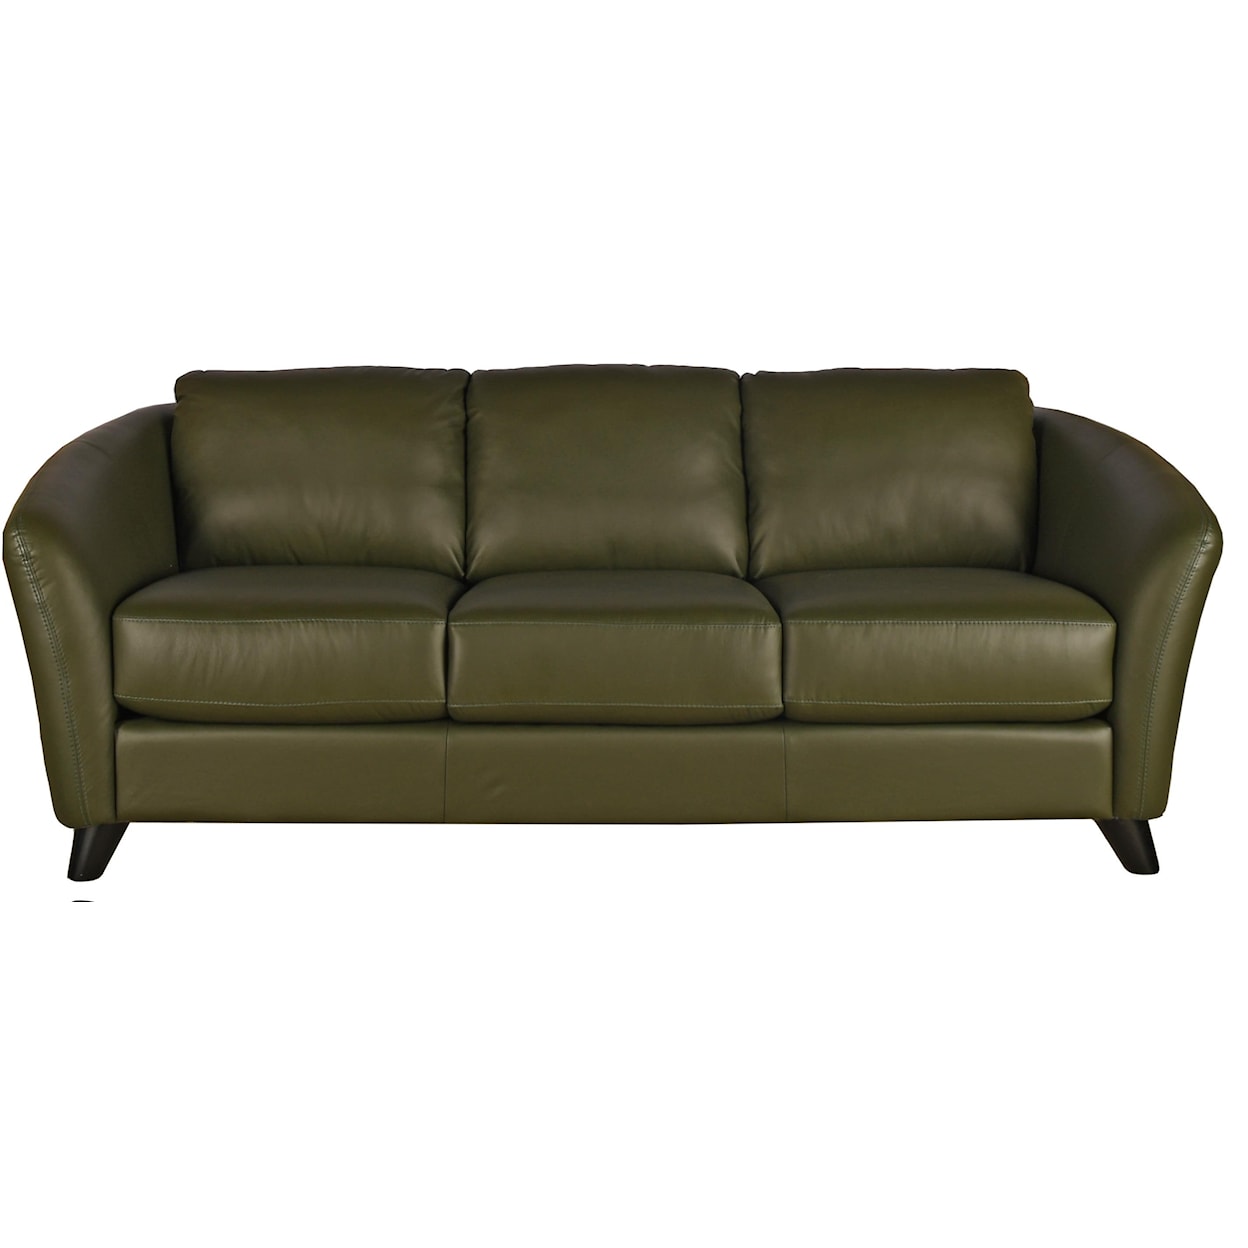 Palliser Alula Leather Sofa